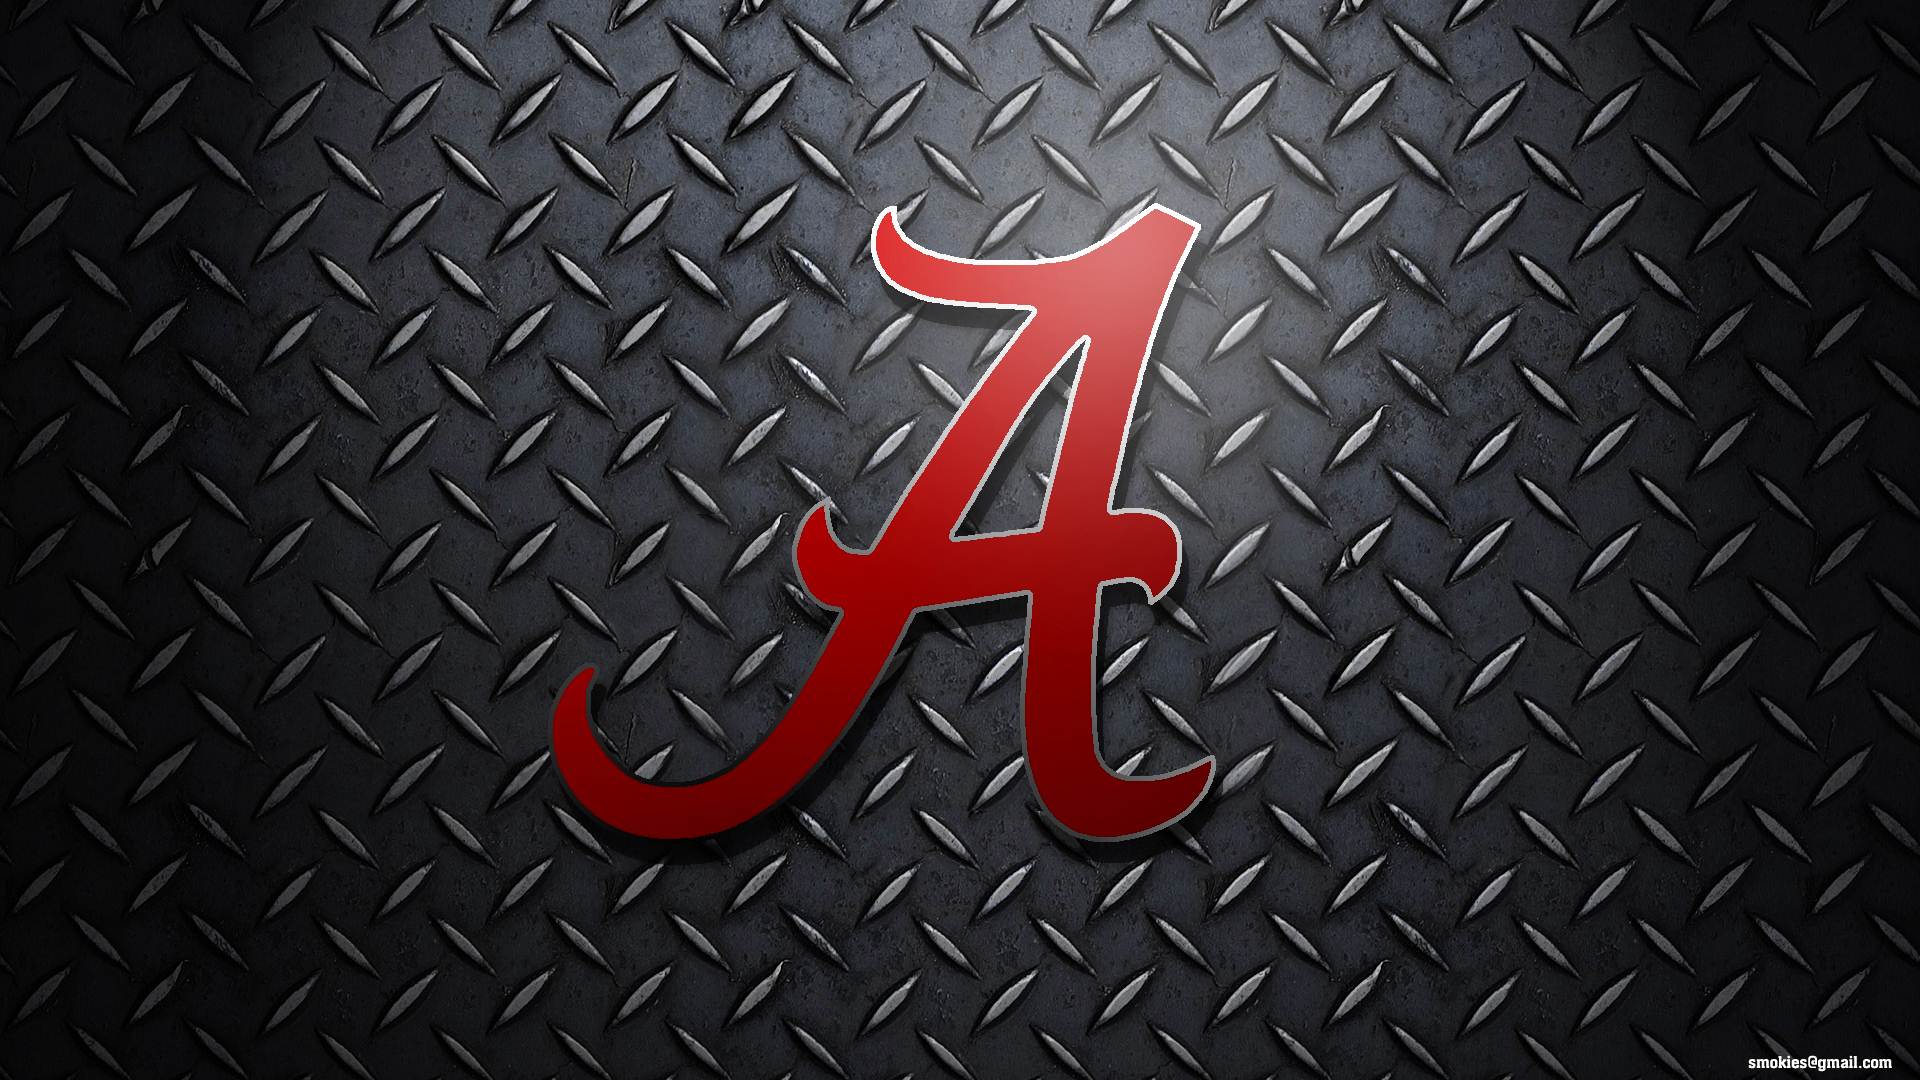 The Alabama Crimson Tide Football Team Represents The University Of